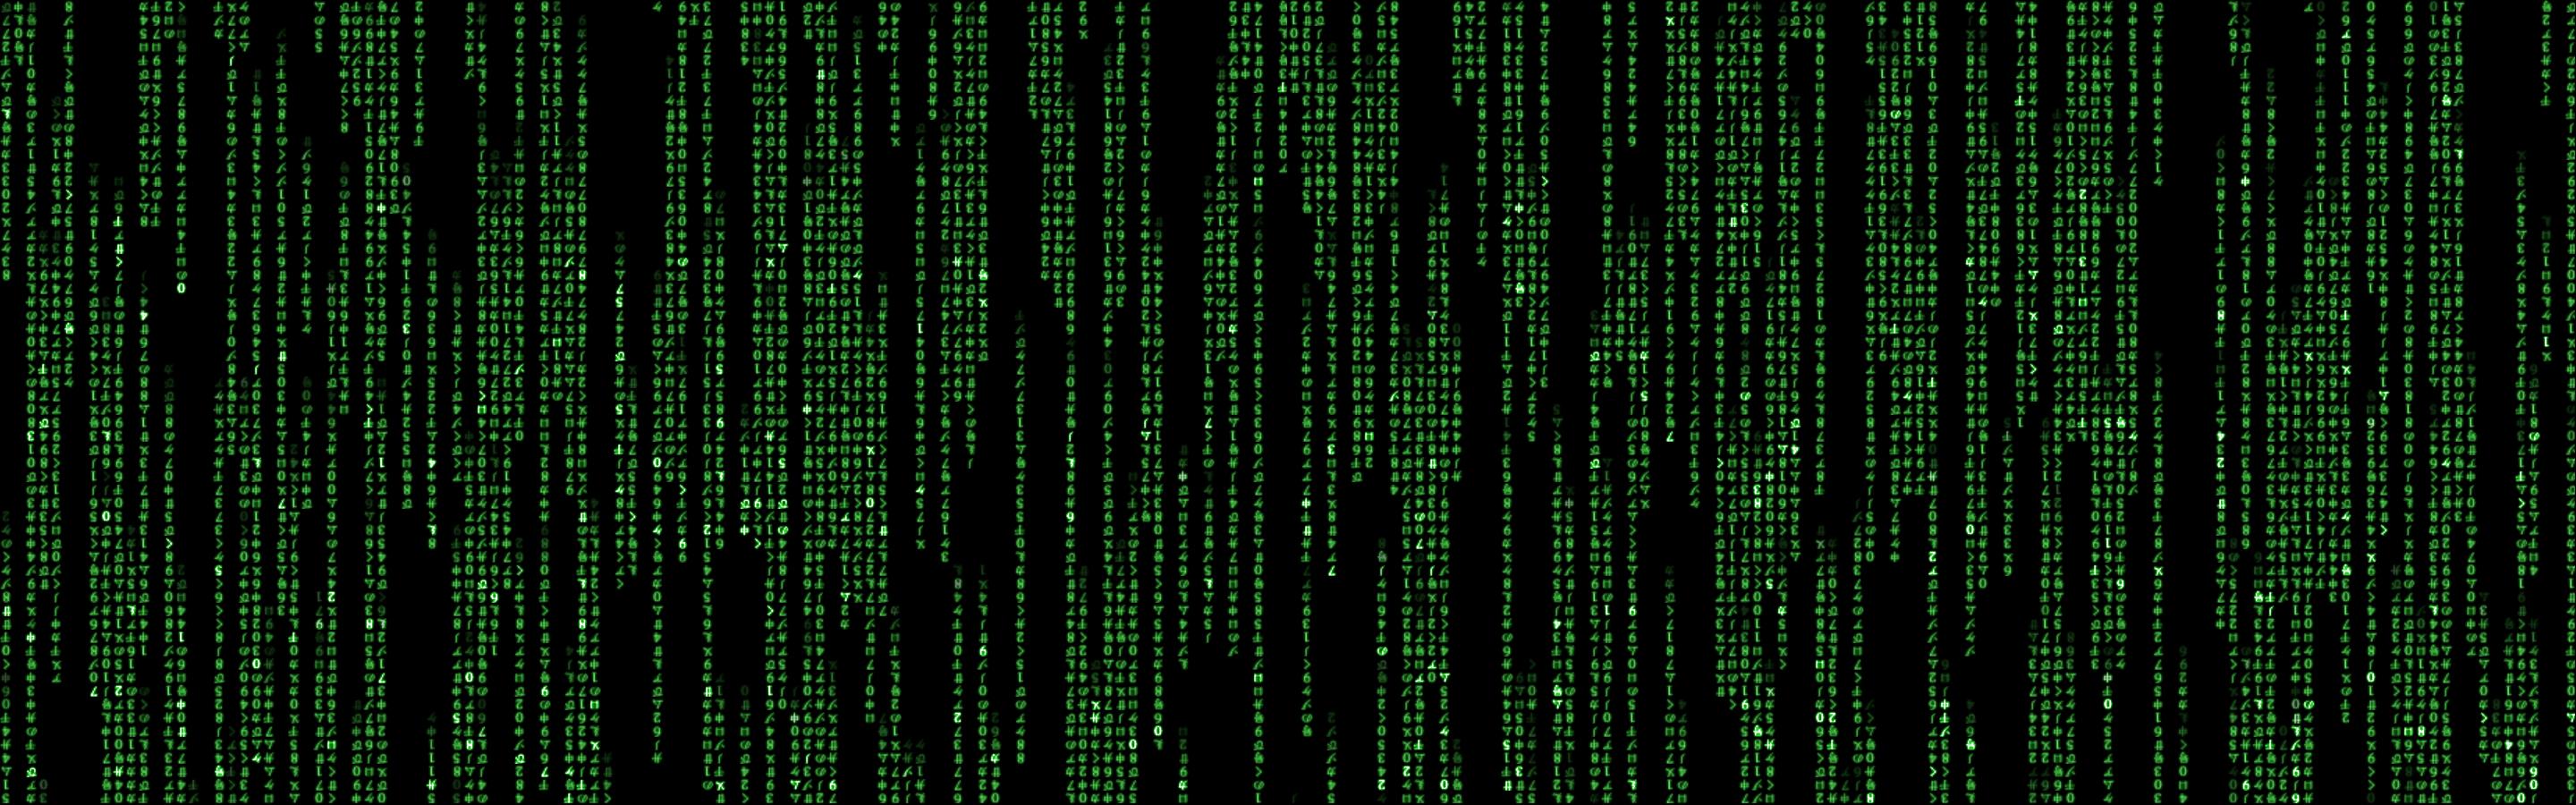 4K Matrix Code Wallpapers - Top Free 4K Matrix Code Backgrounds ...